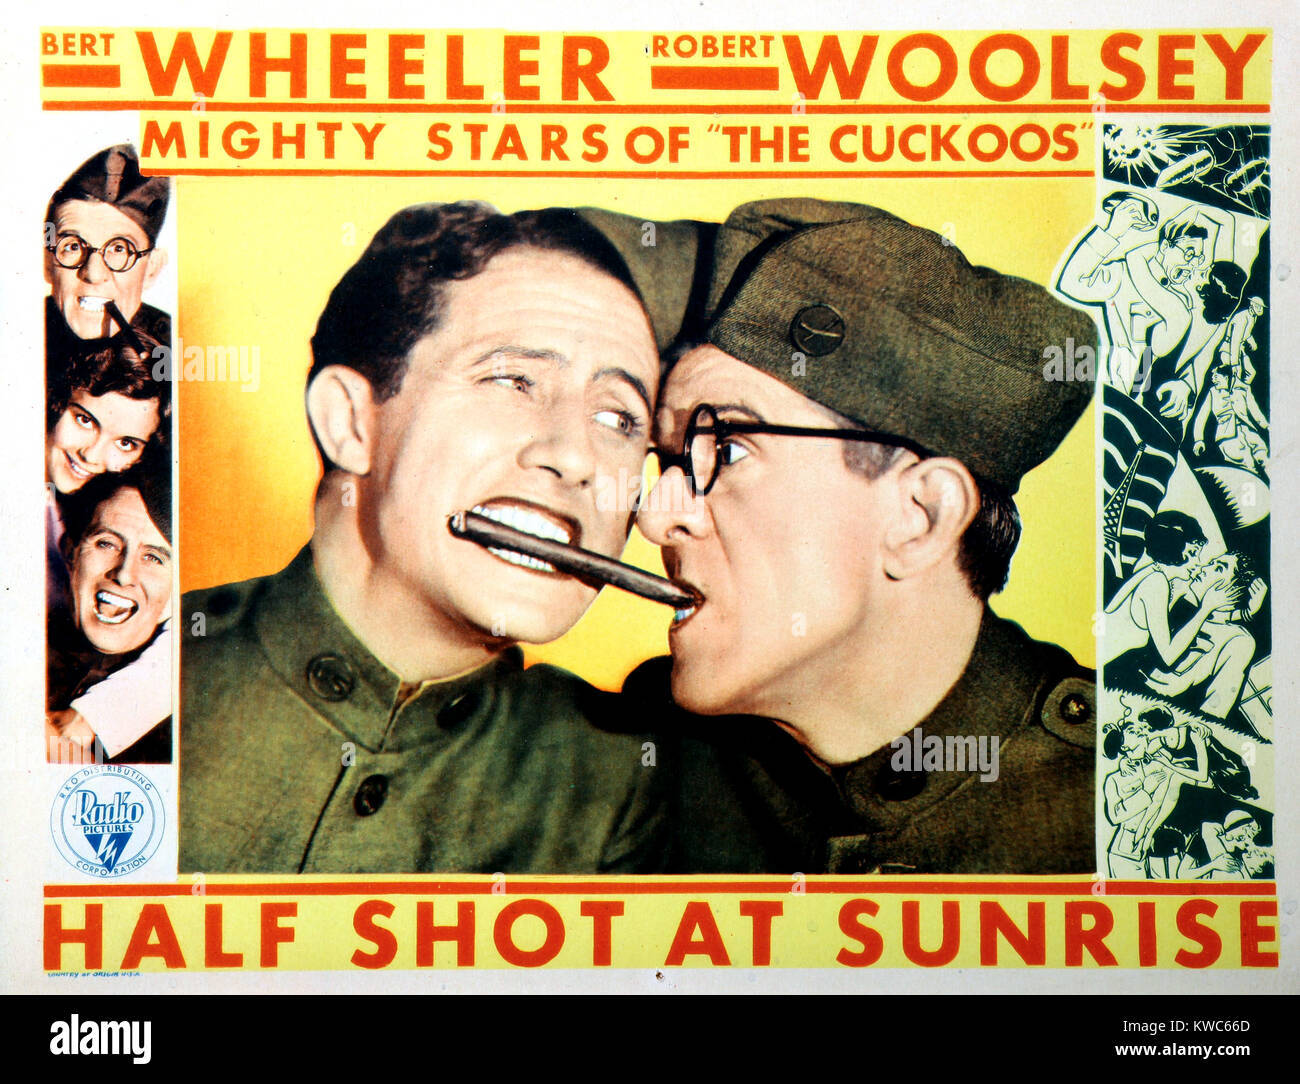 HALF SHOT AT SUNRISE, Bert Wheeler, Robert Woolsey [Wheeler and Woolsey], 1930 Stock Photo